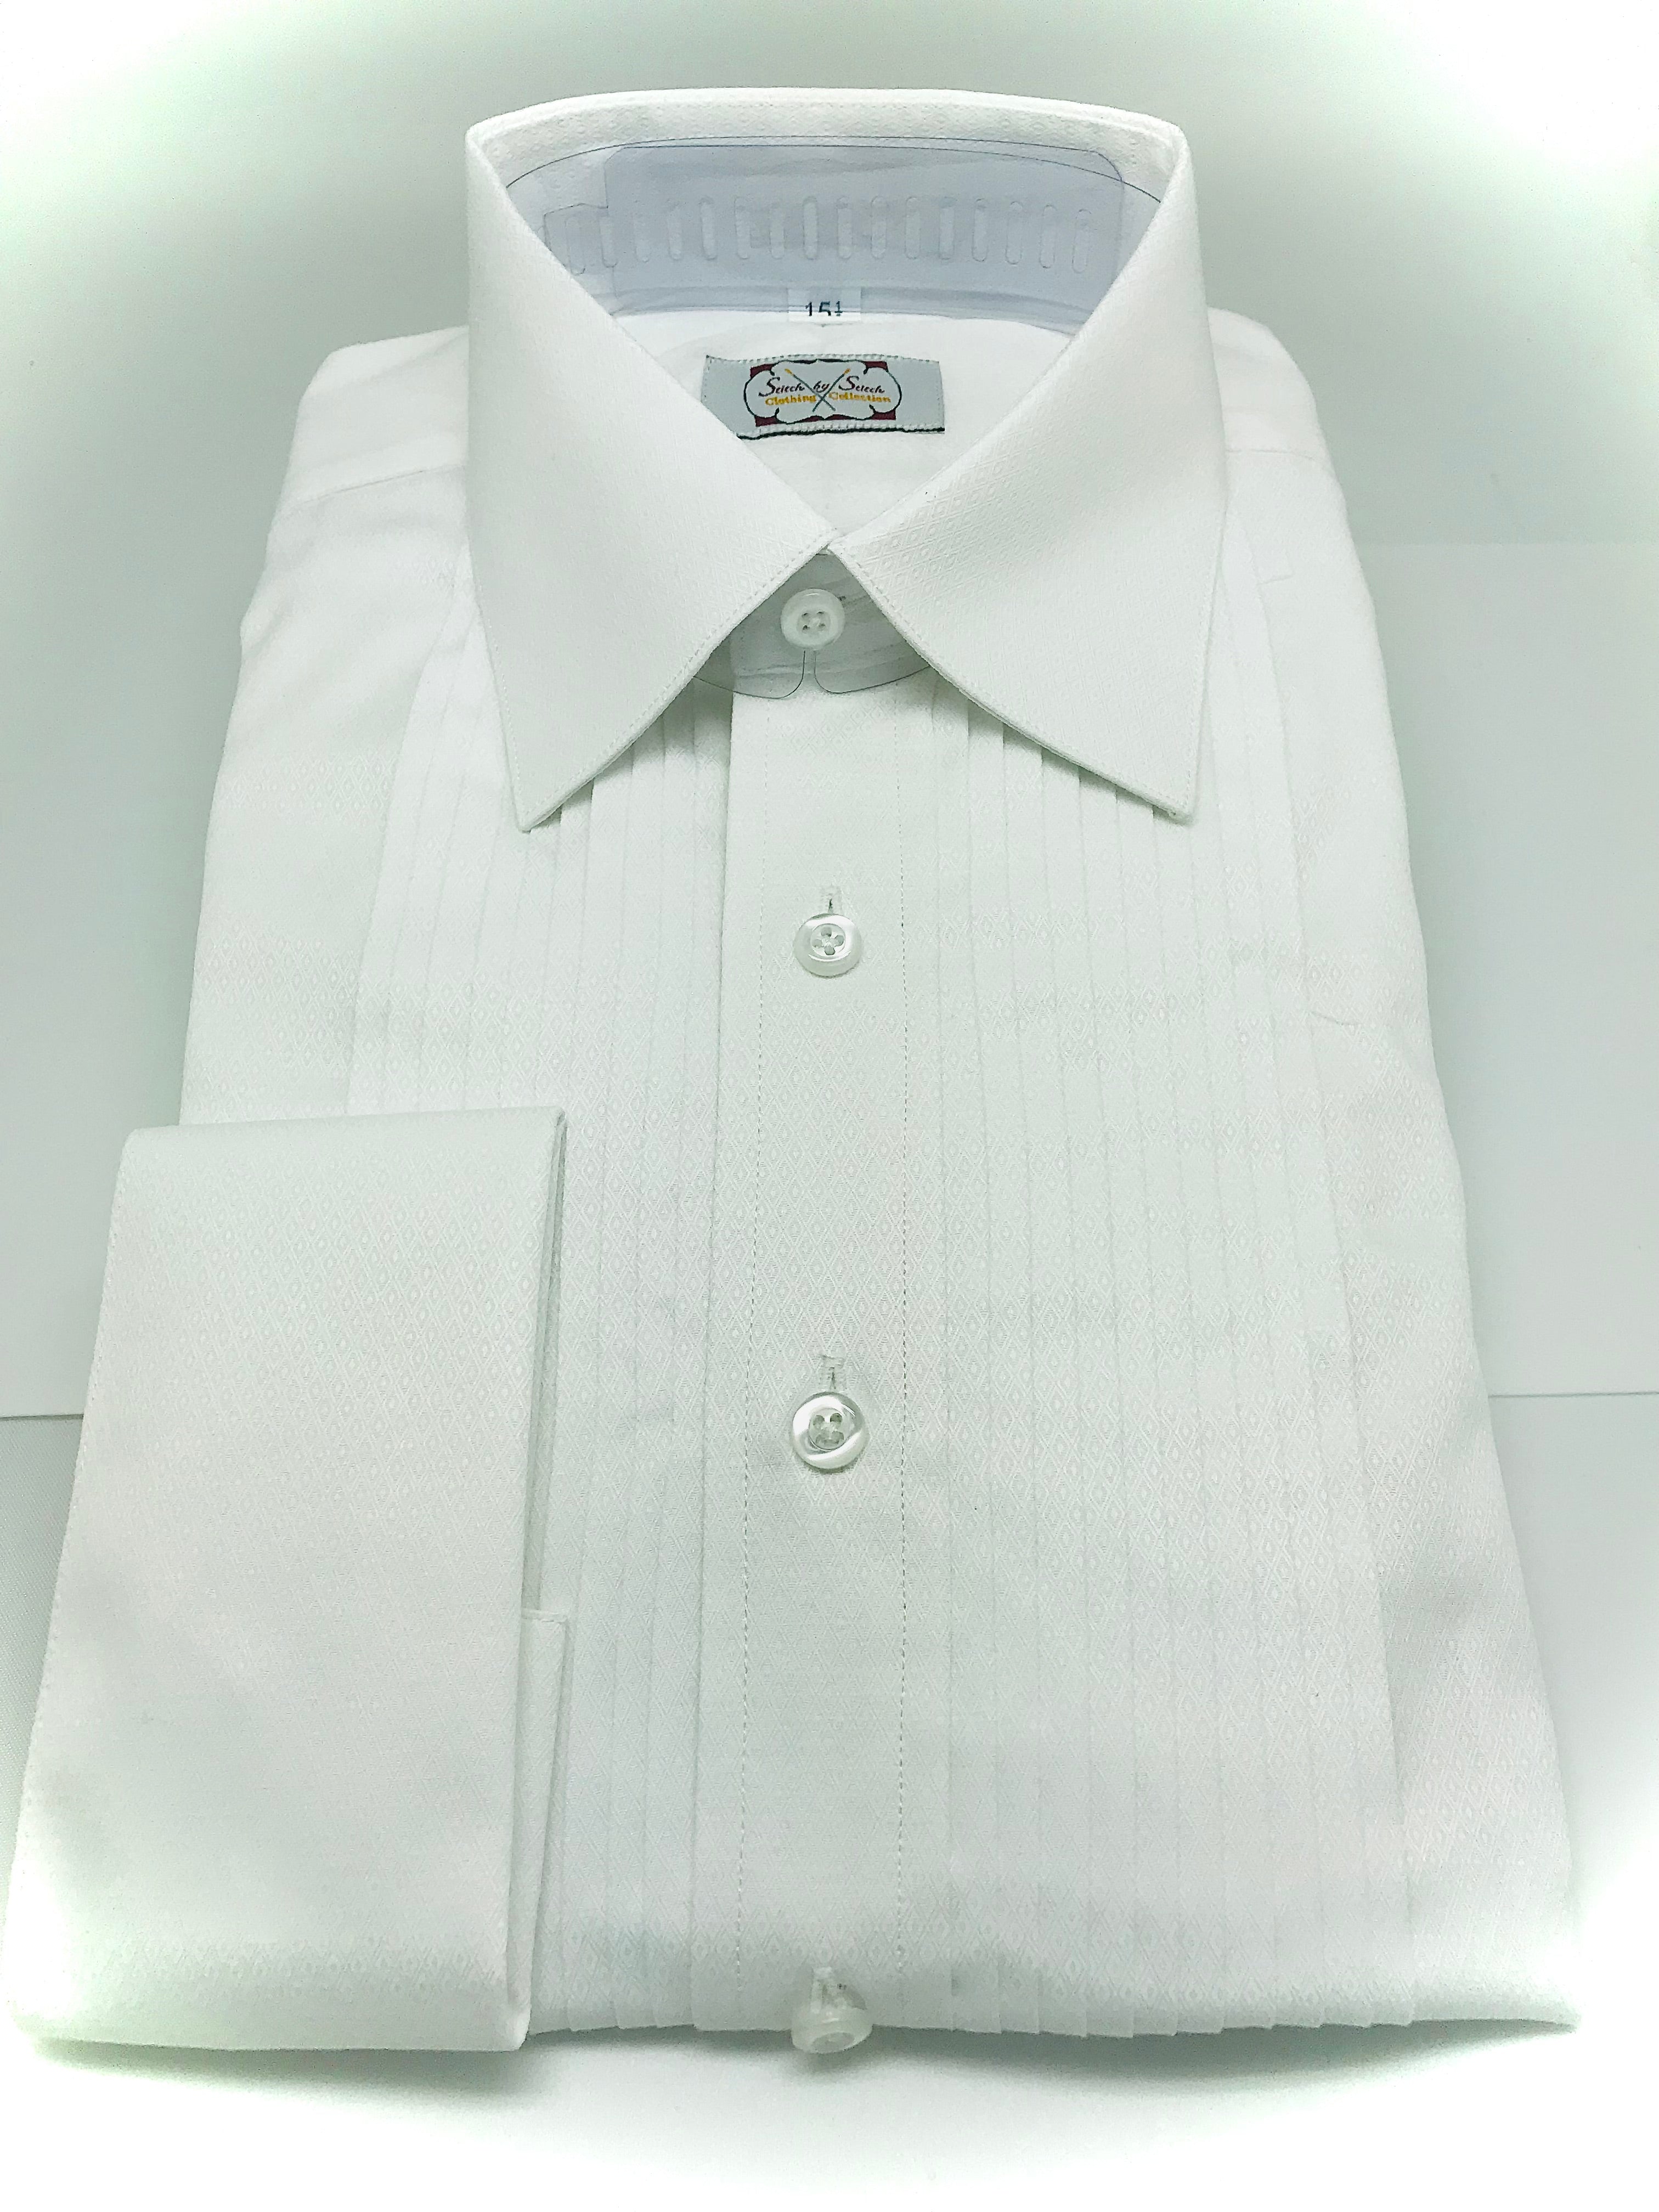 Stitch by Stitch Tuxedo White Diamond Shirt